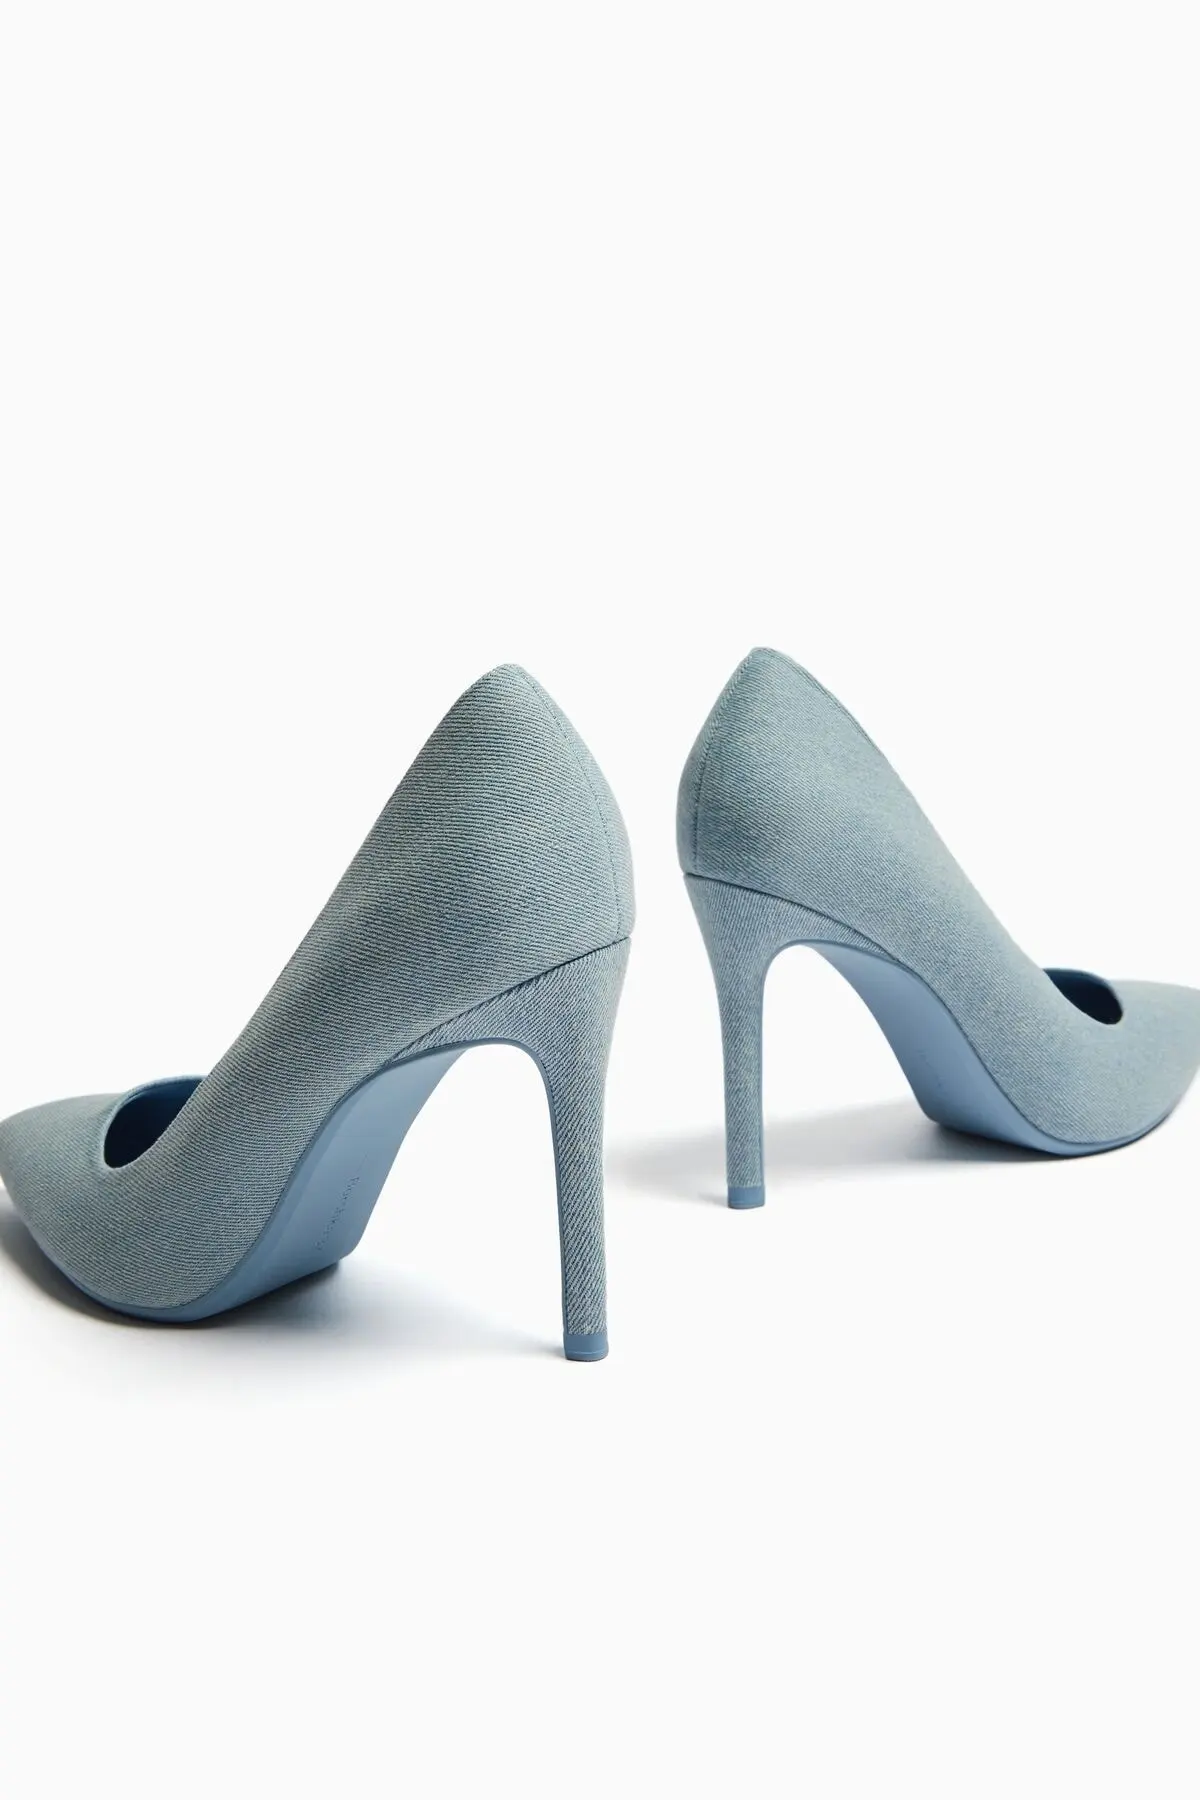 کفش پاشنه بلند نوک تیز زنانه آبی روشن برند Bershka